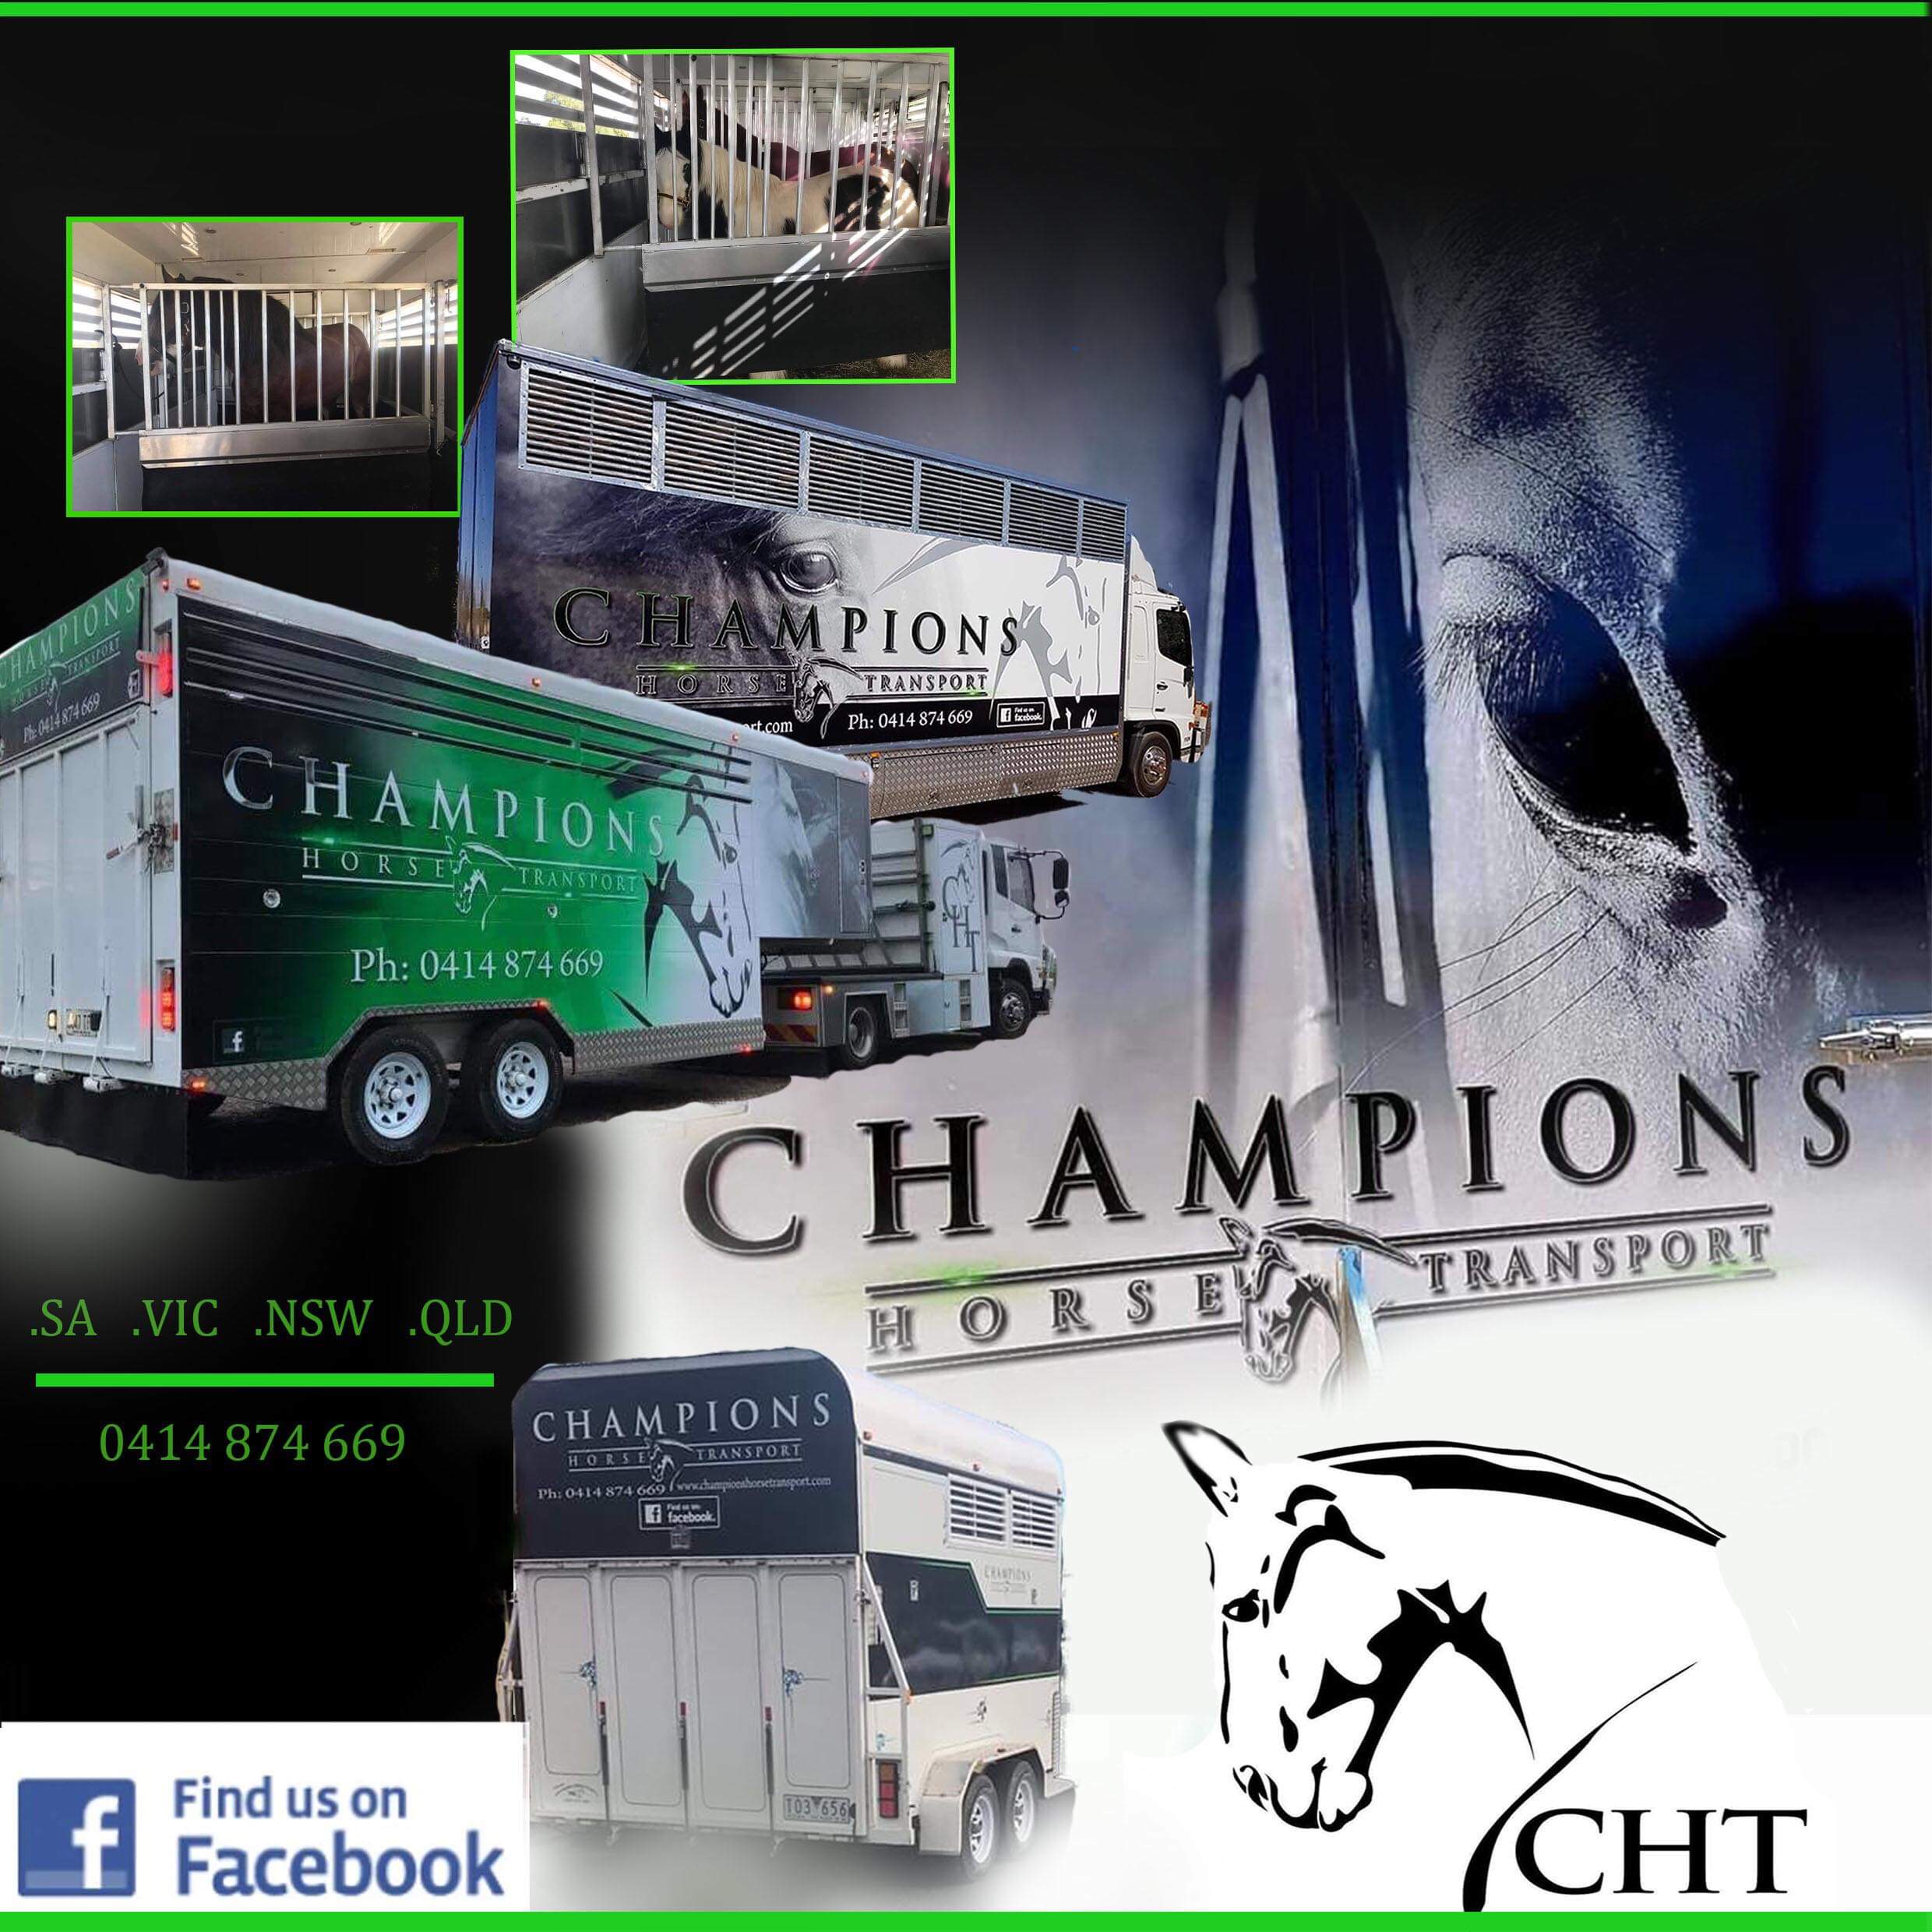 Champions Horse Transport